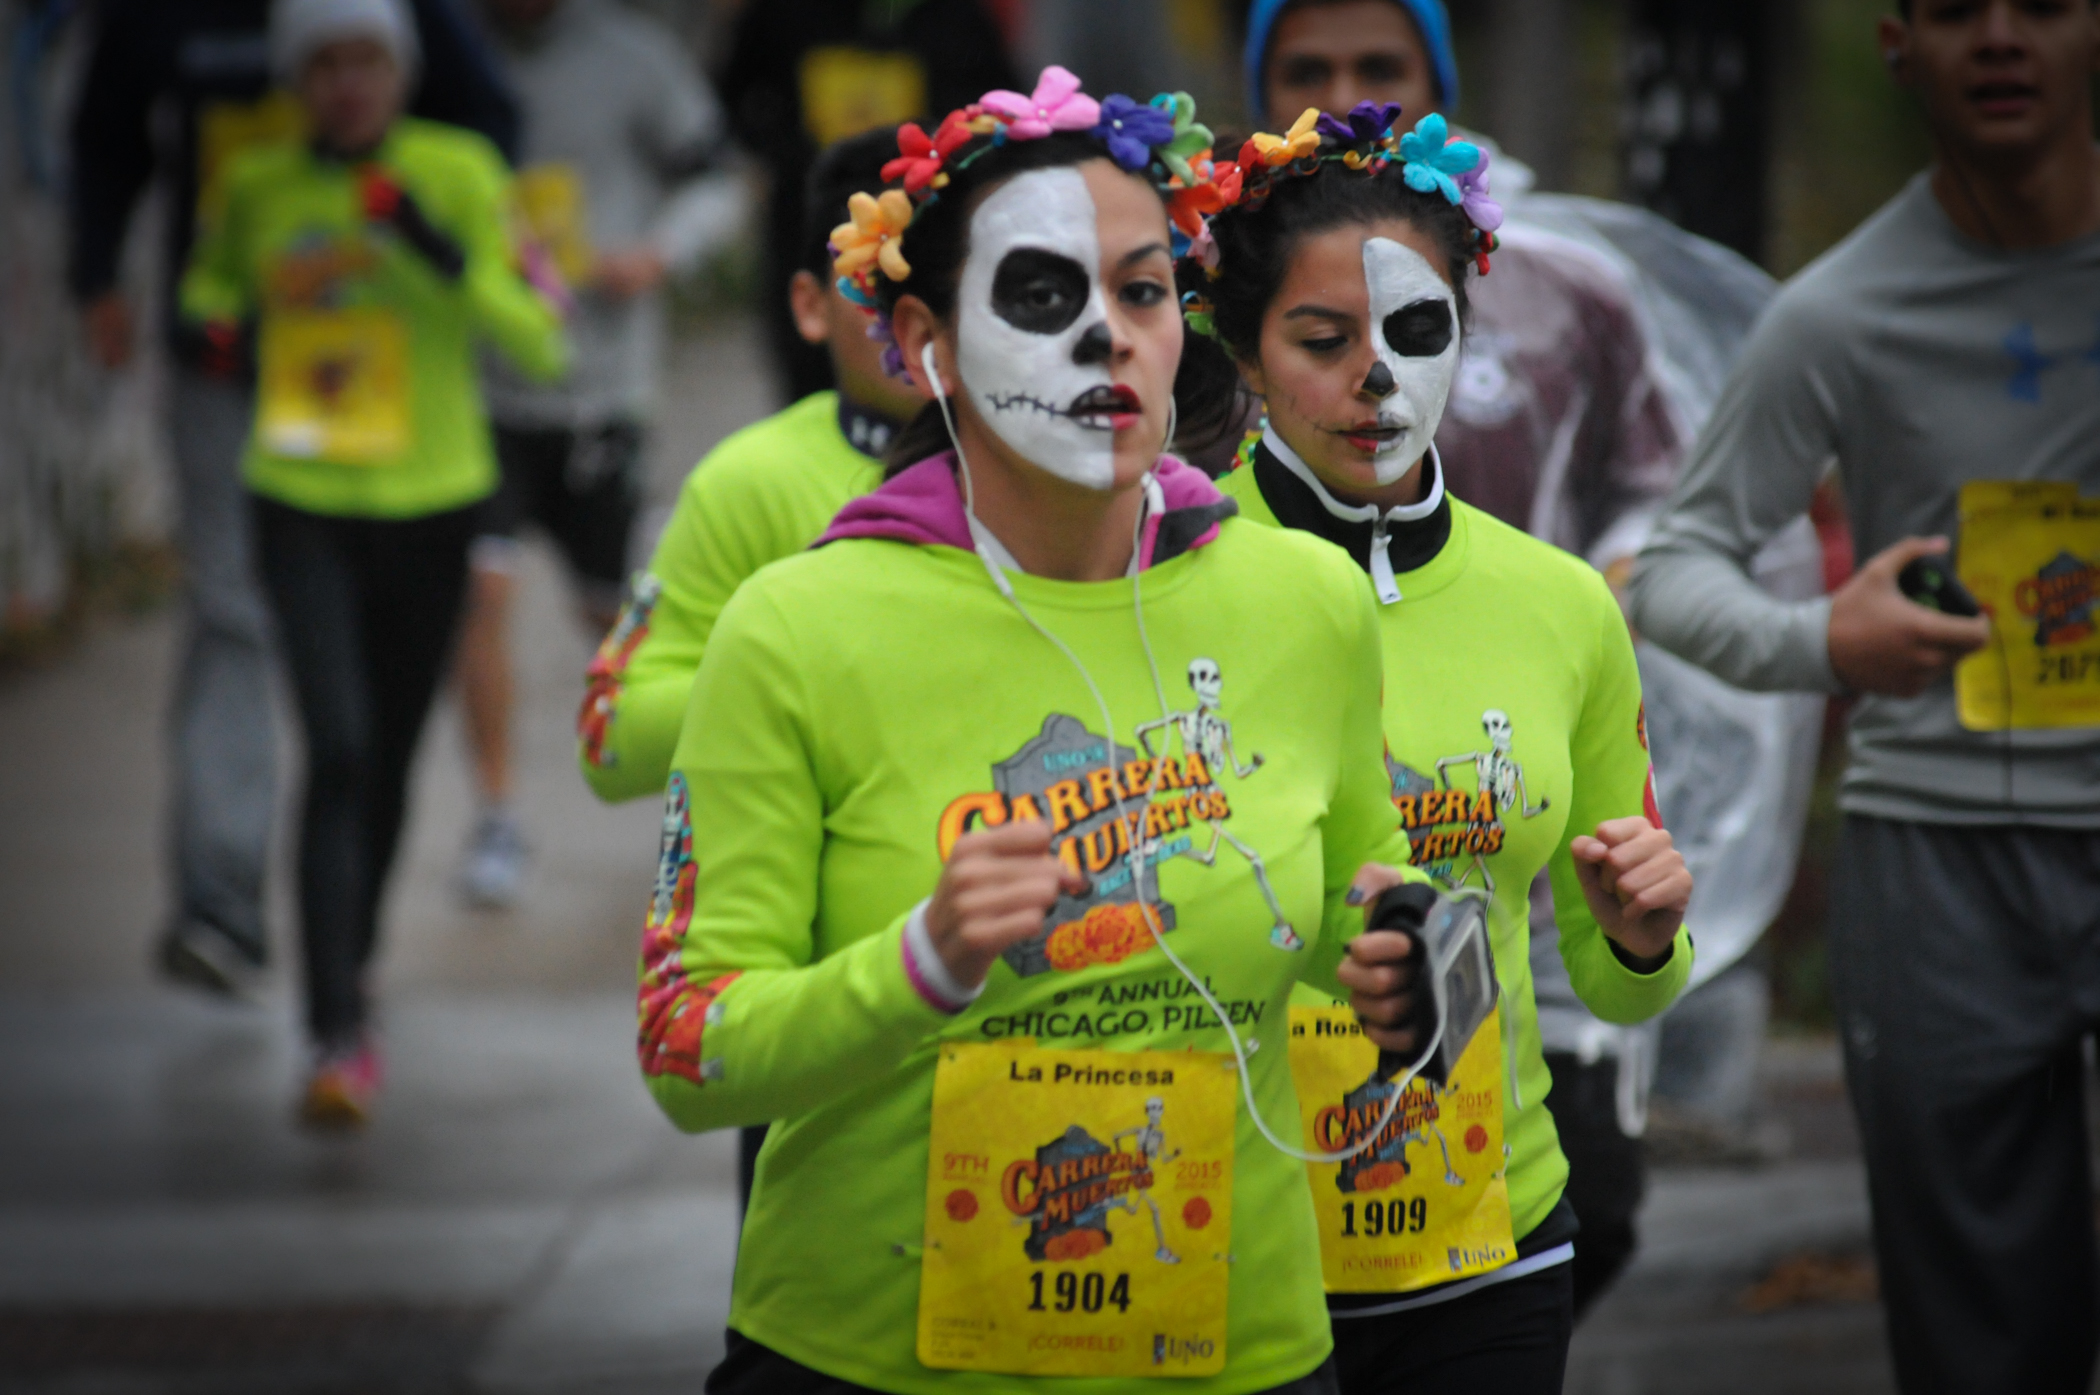 Celebrate Carrera de los Muertos/Race of the Dead 5K 10th Anniversary on  October 29. | Press Release Distribution